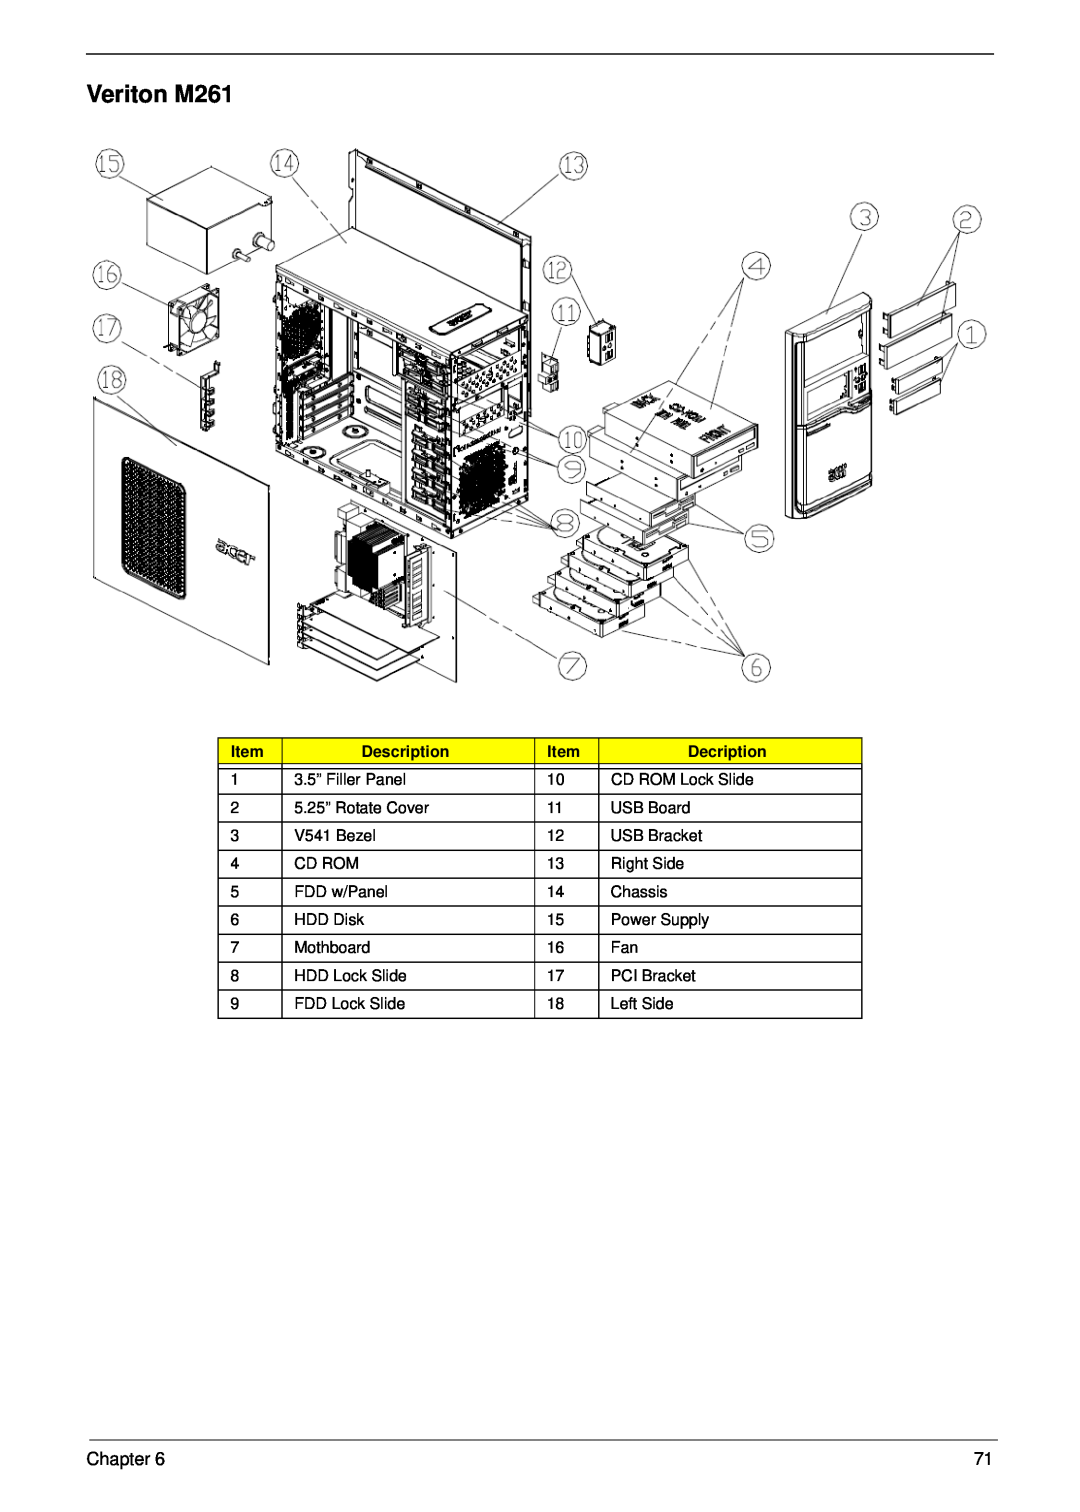 Aspire Digital M1610 manual Veriton M261, Chapter 